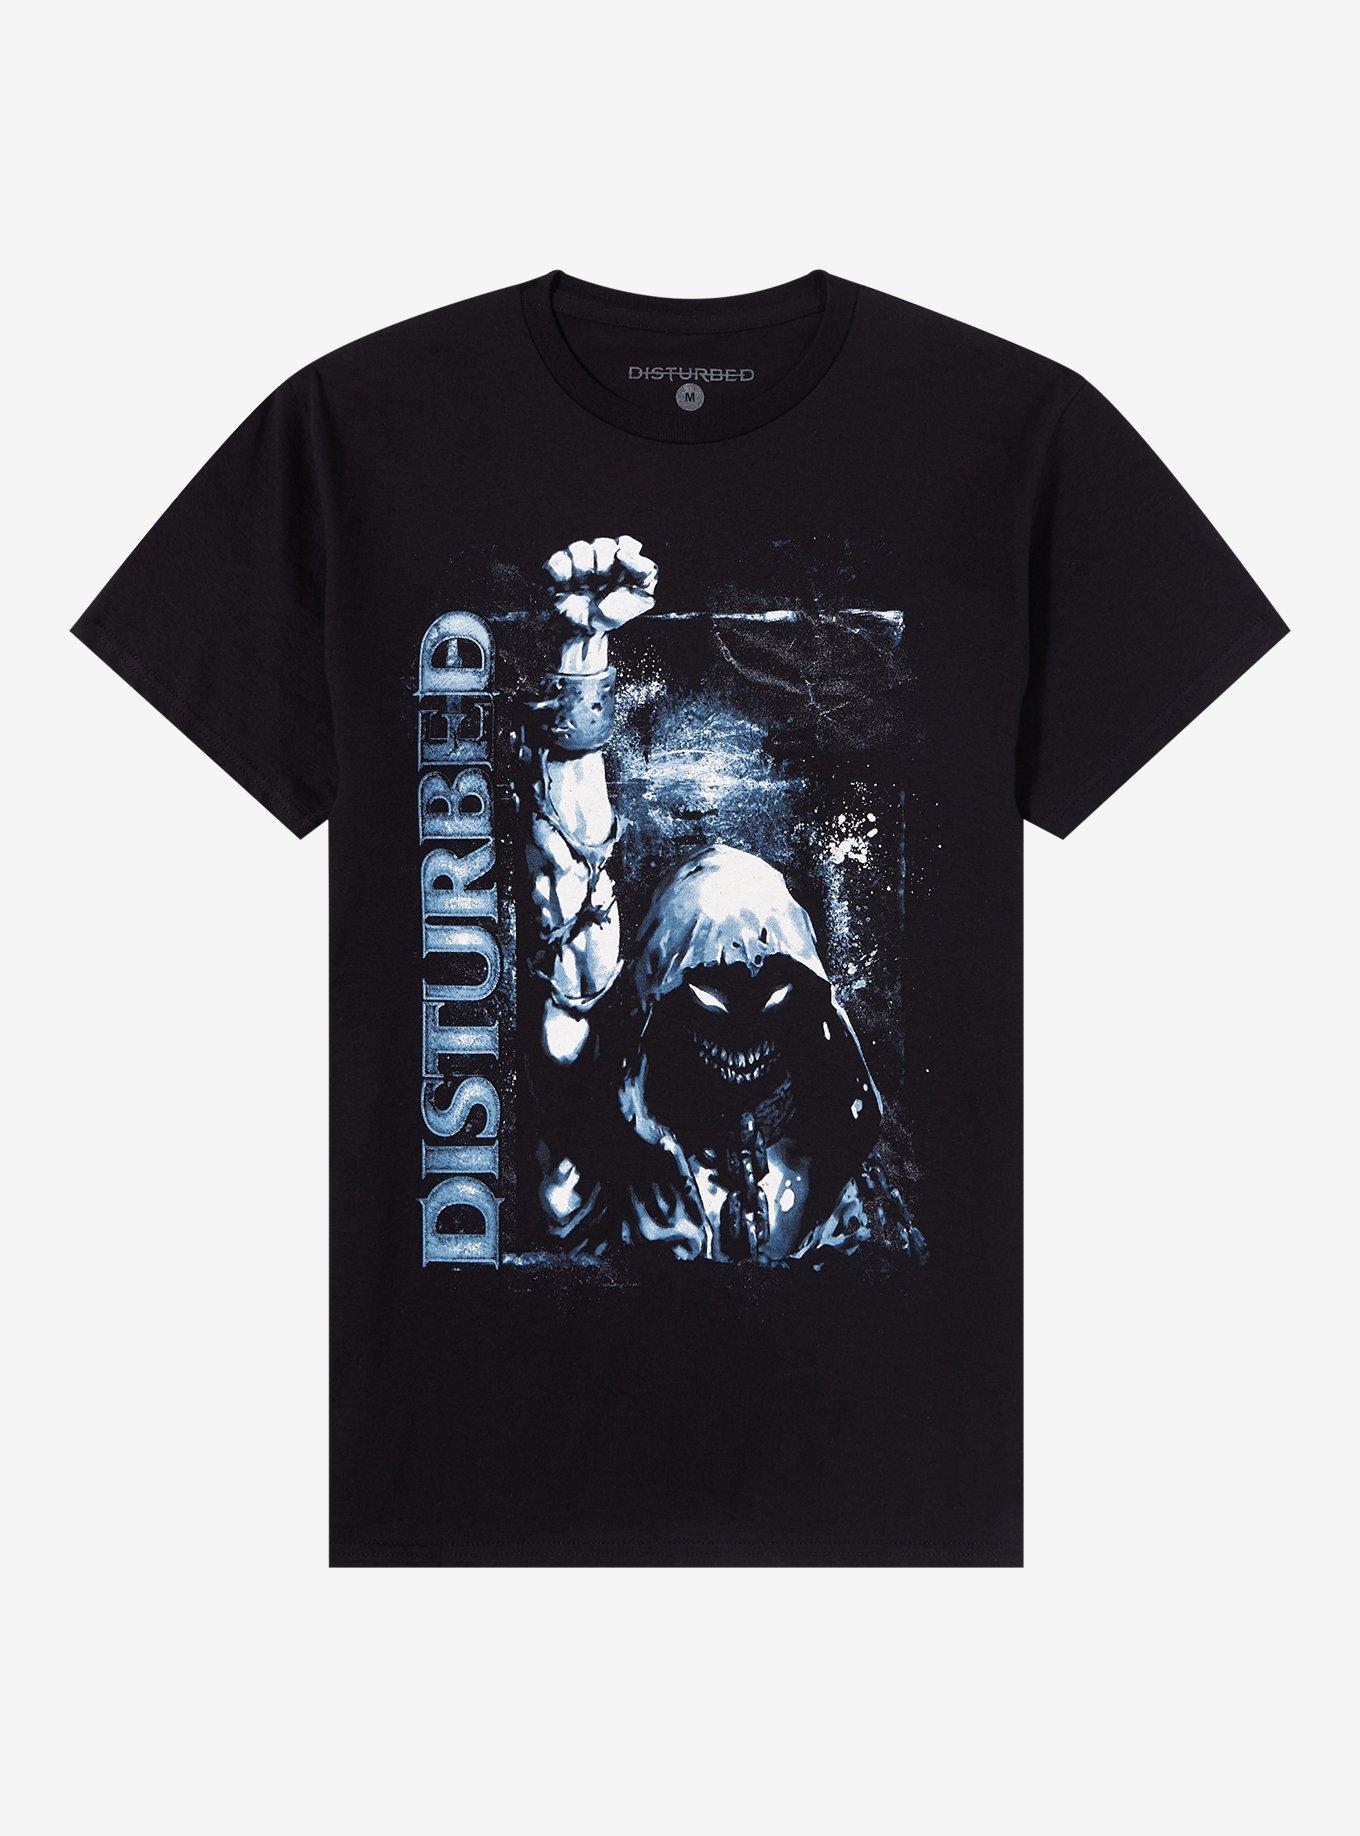 Disturbed Raised Fist T-Shirt